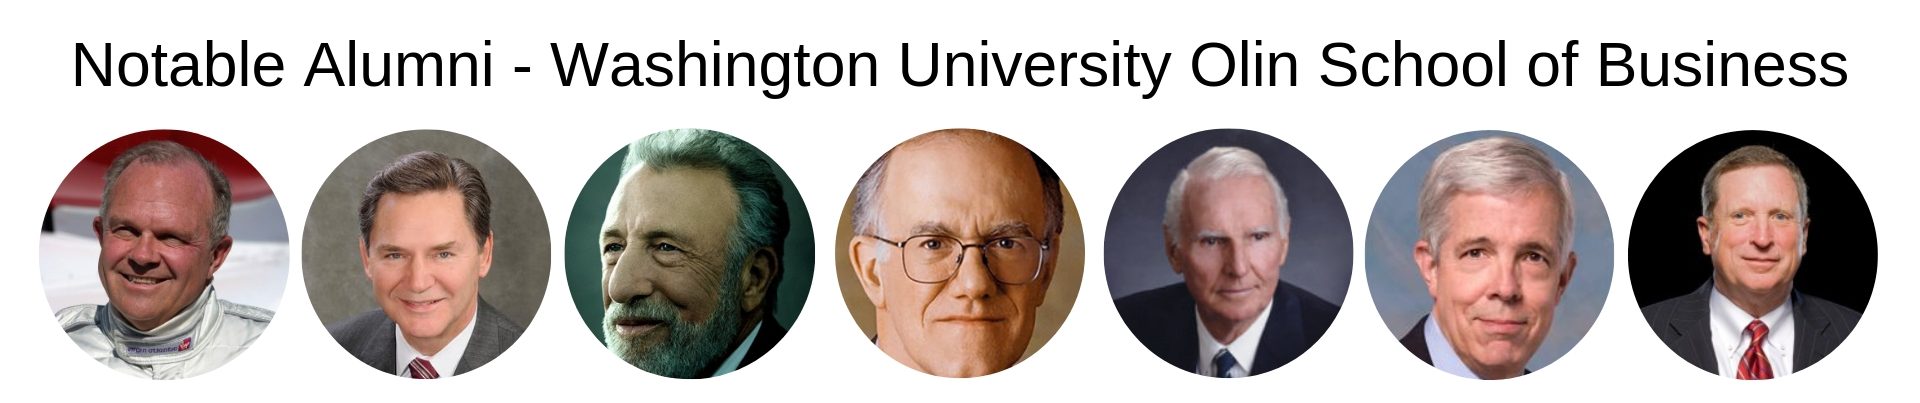 Washington University Olin Business School - Olin MBA Program - Notable Alumni